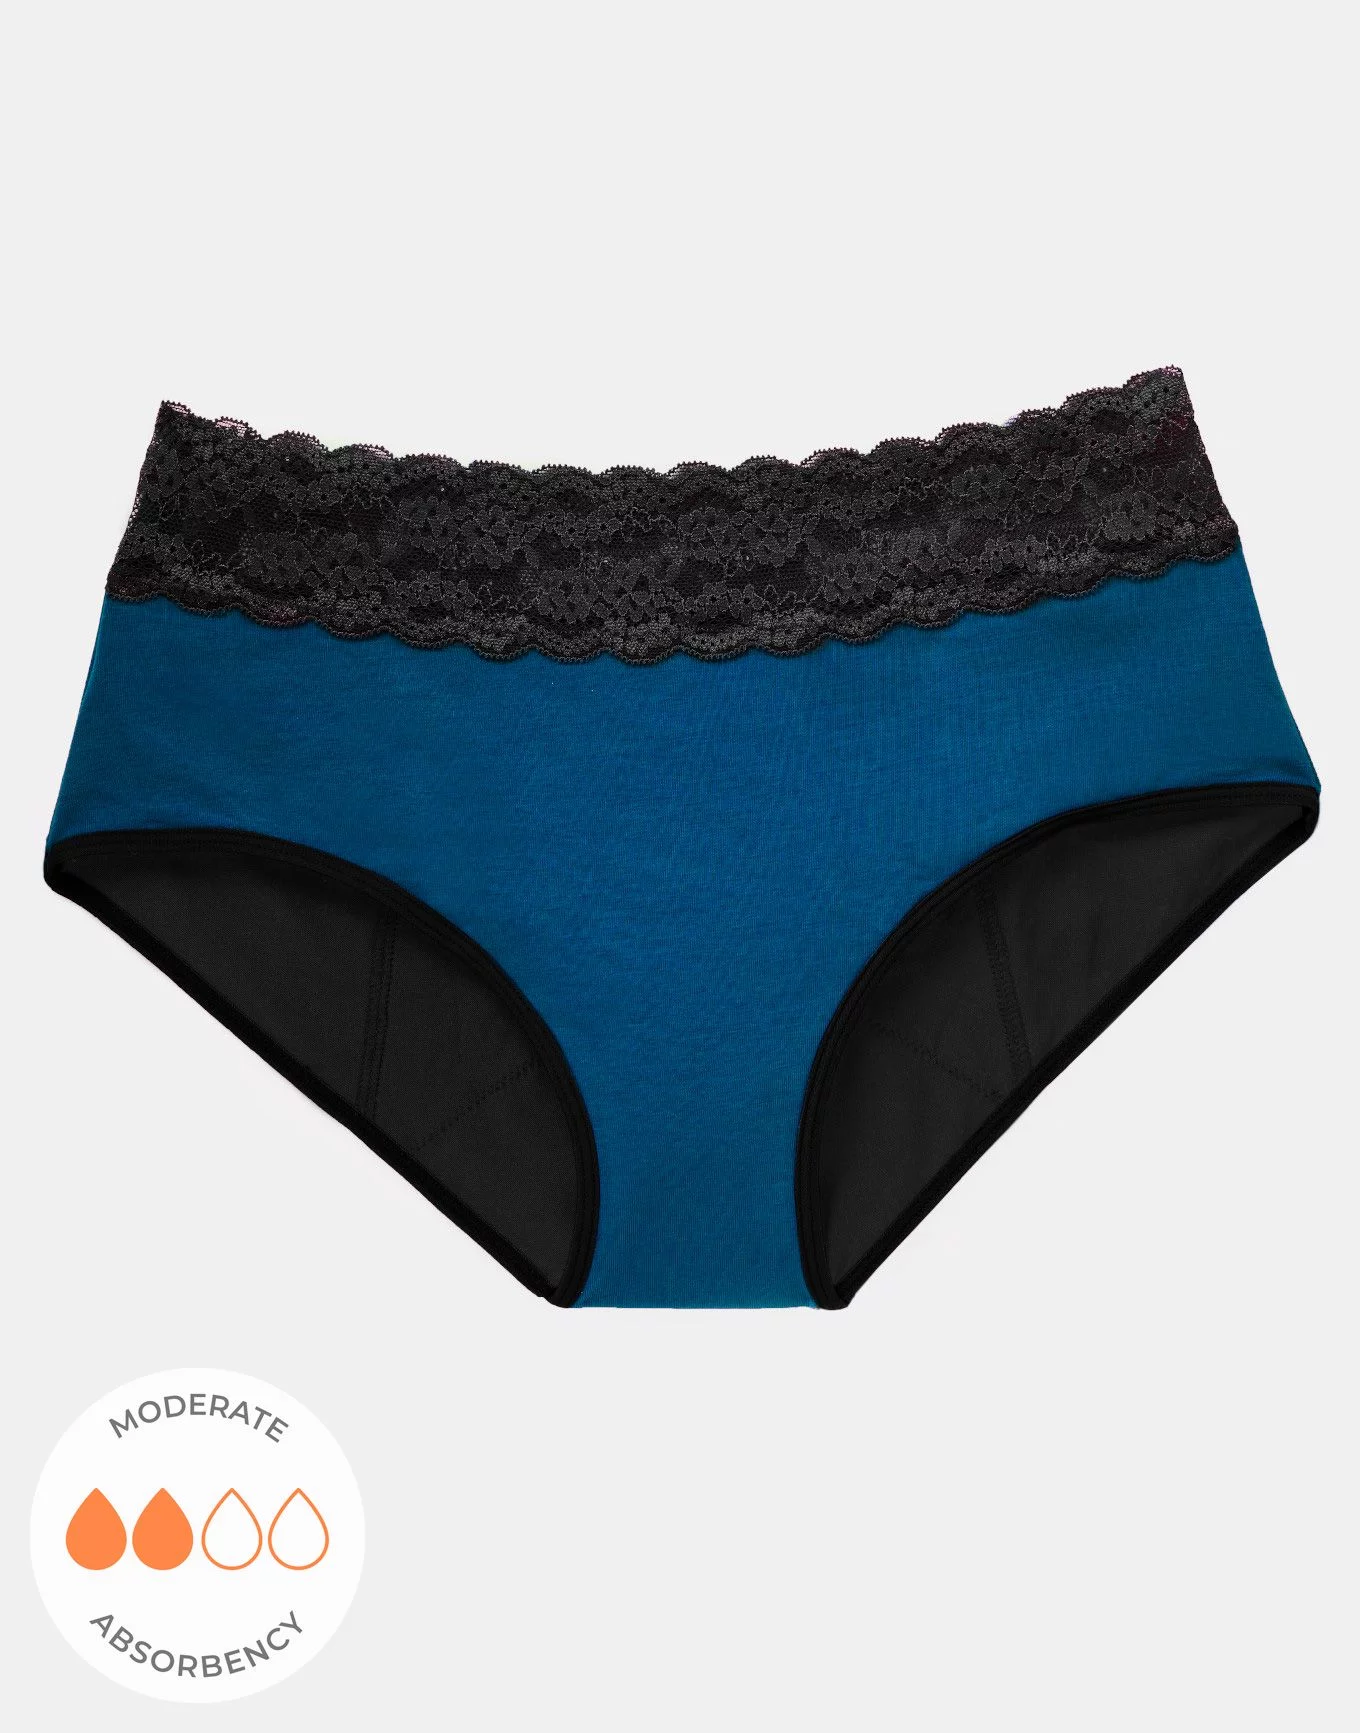 NEXT Black Blue Lace Trim Microfibre NVPL Midi Panty Brief Knickers Size 6  - 20